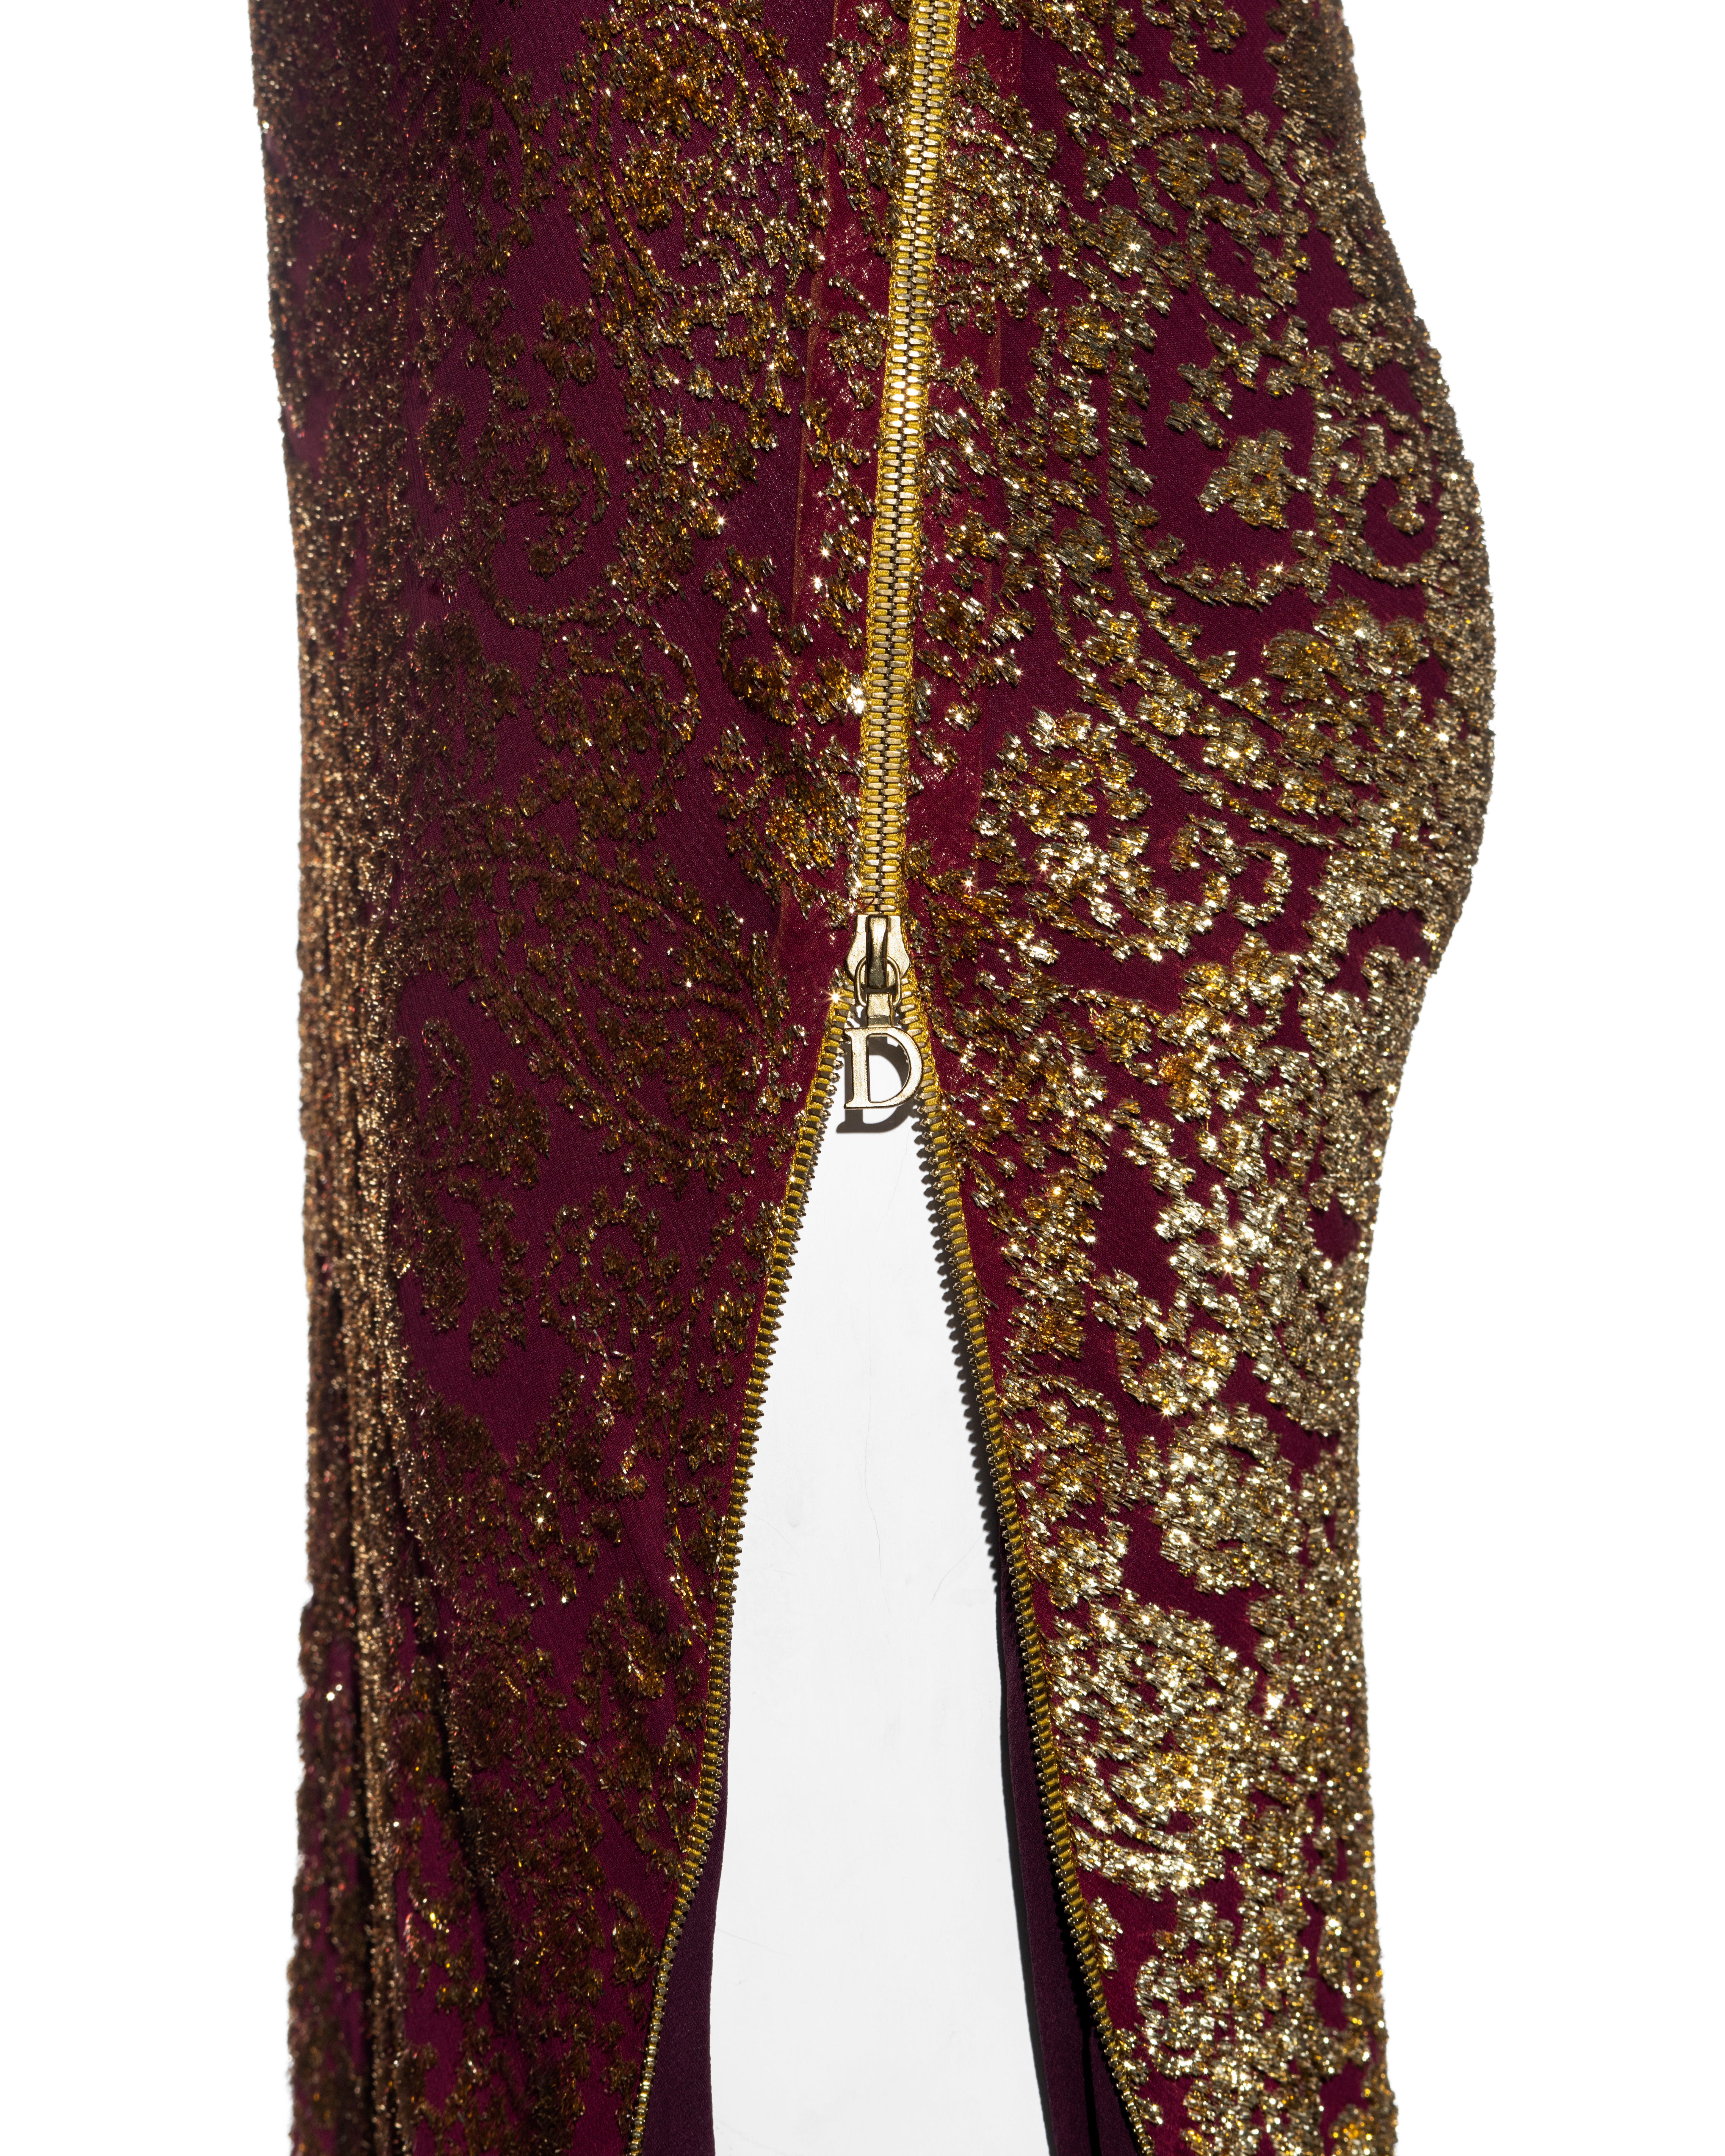 Christian Dior by John Galliano gold and burgundy silk evening dress, ss 2001 1